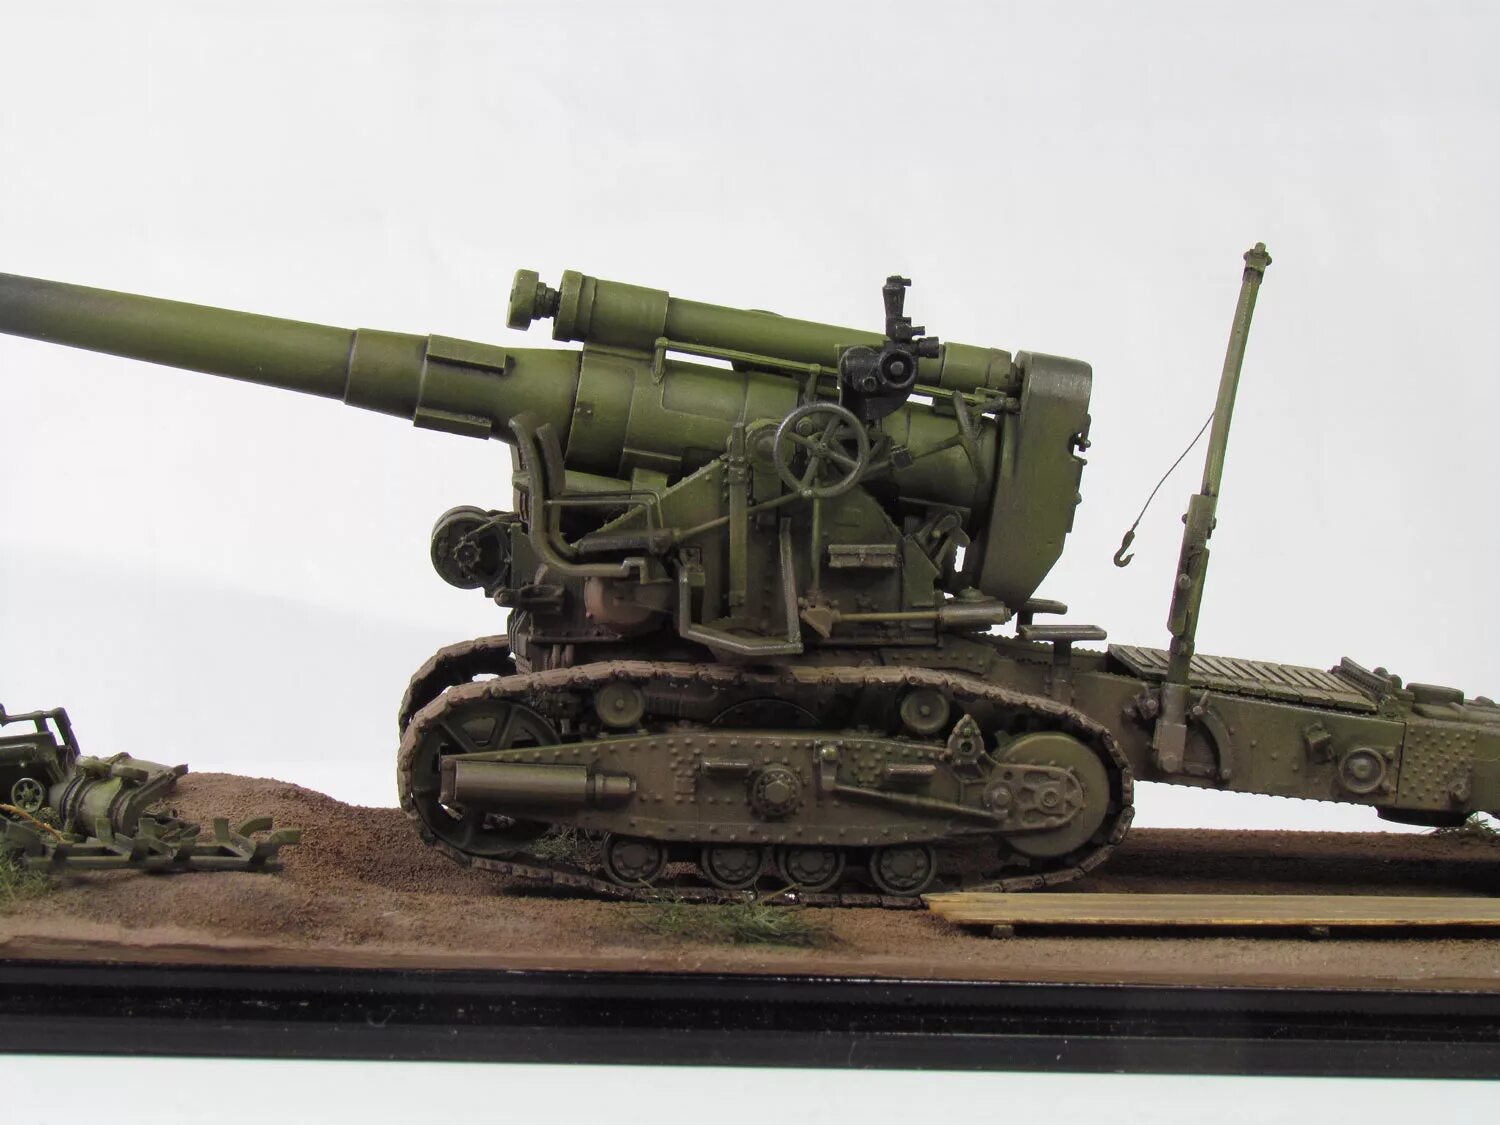 Гаубица б 4 1 35. Кувалда Сталина 203-мм гаубица б-4. 4бр-203. Б-4 - 203-мм гаубица с тягачом.